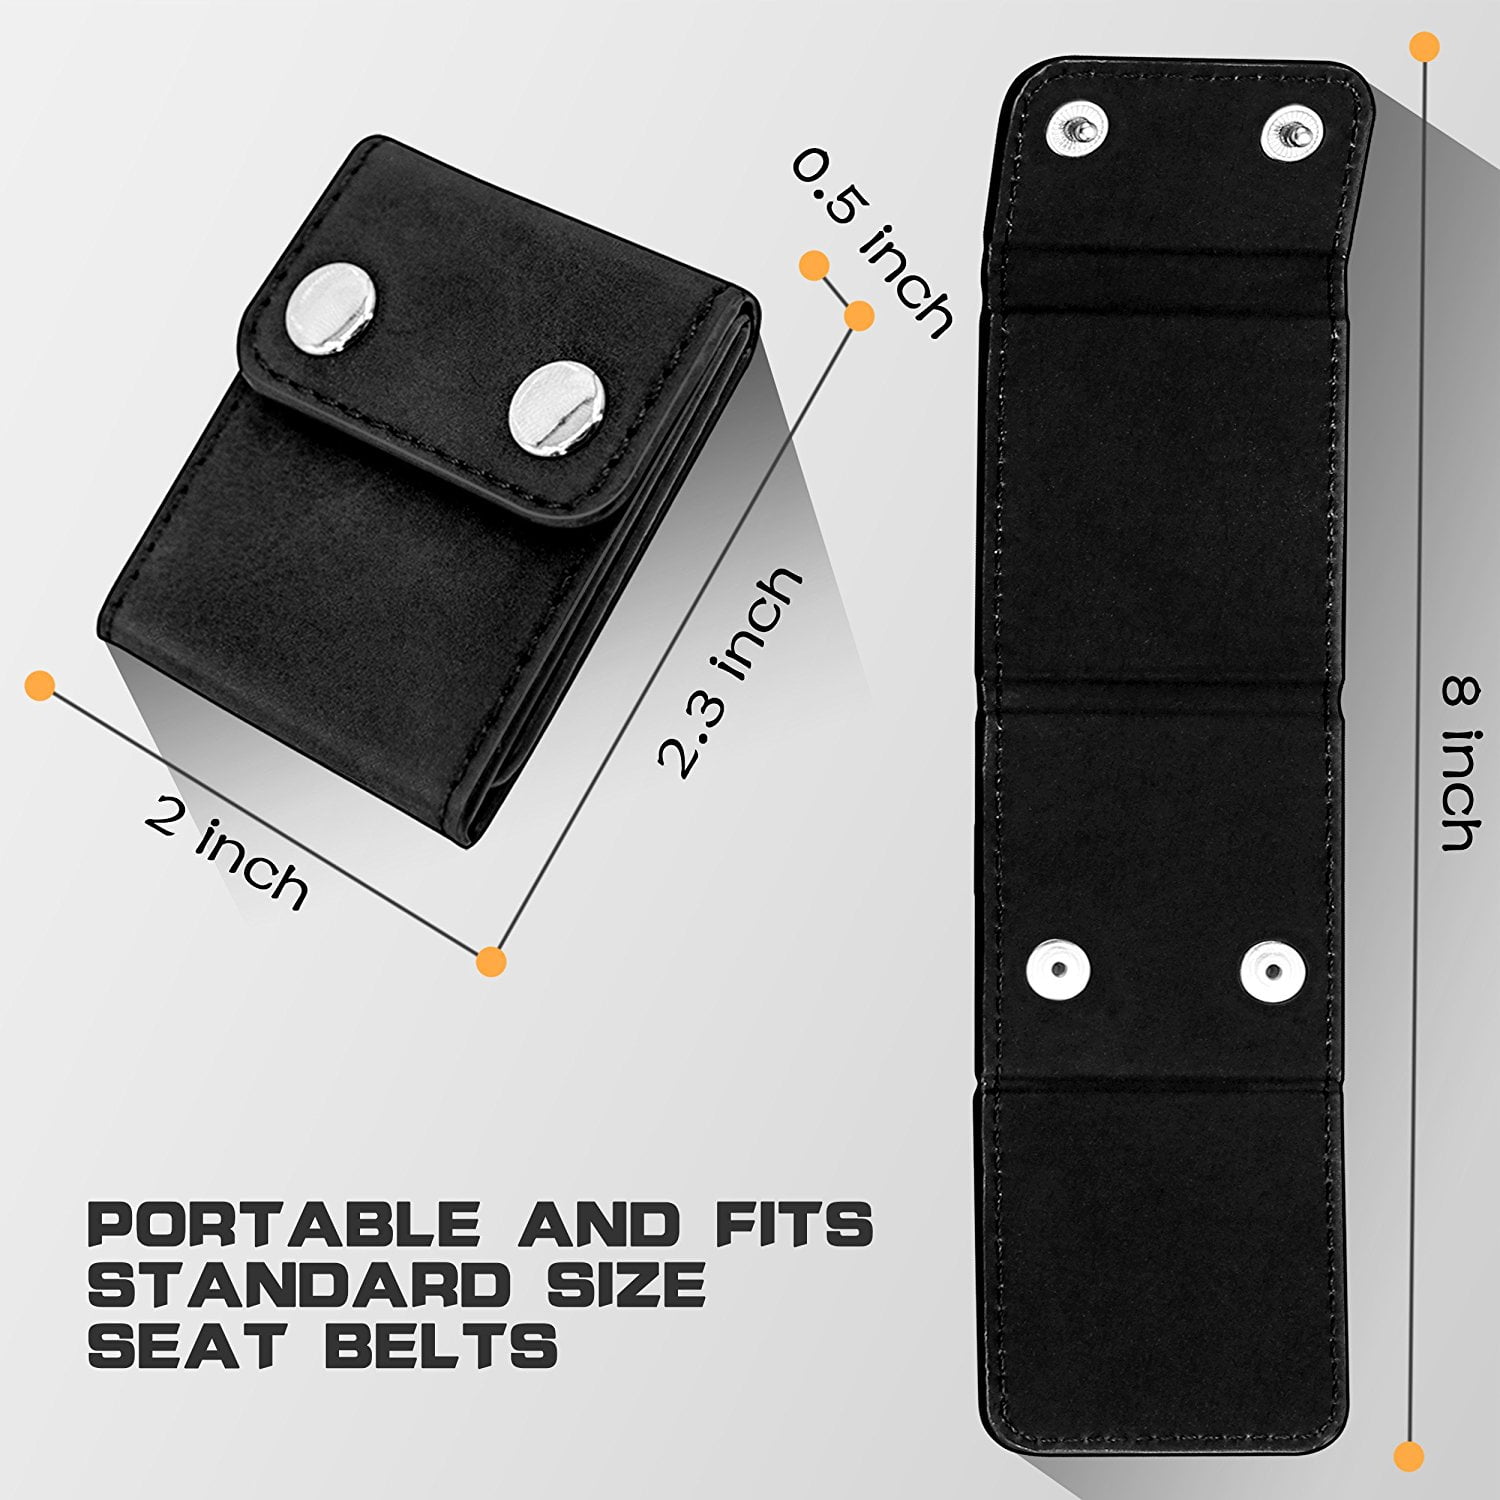 ZaCoo 2 Pcs Car Seat Belt Adjuster Seatbelt Clips Adjust Seat Belt Tightness to Relax Shoulder Neck Carbon Fiber Texture Black